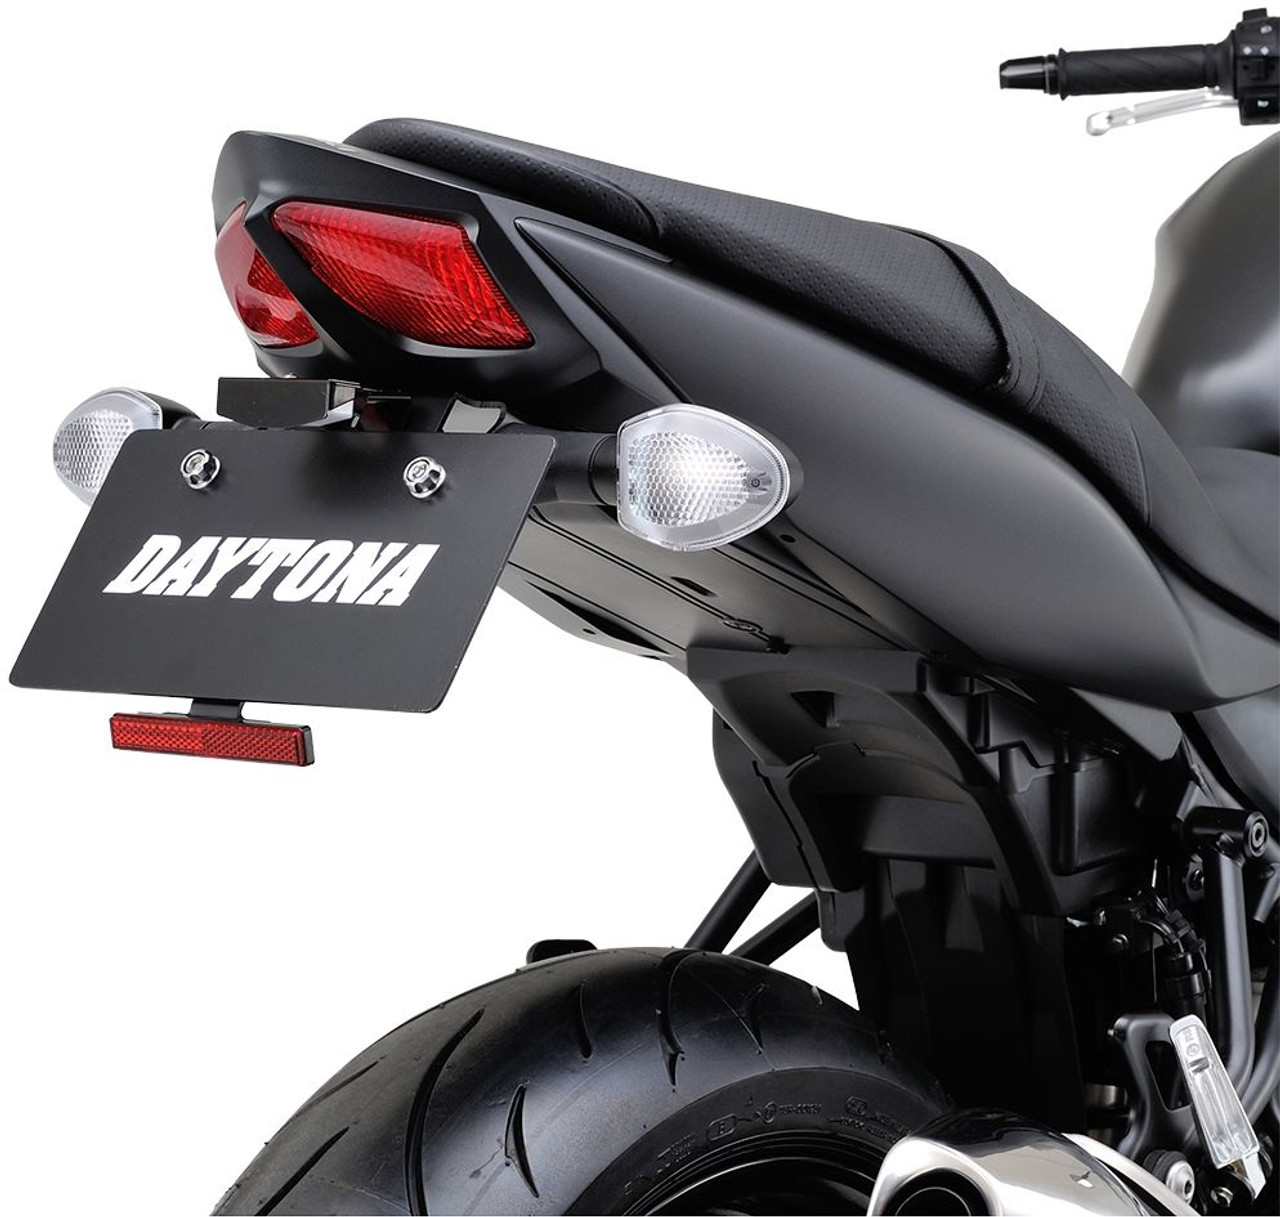 Daytona (Japan) Motorcycle Tail Tidy Kit, Fender Eliminator Edge, LED Fenderless Kit, Suzuki SV650